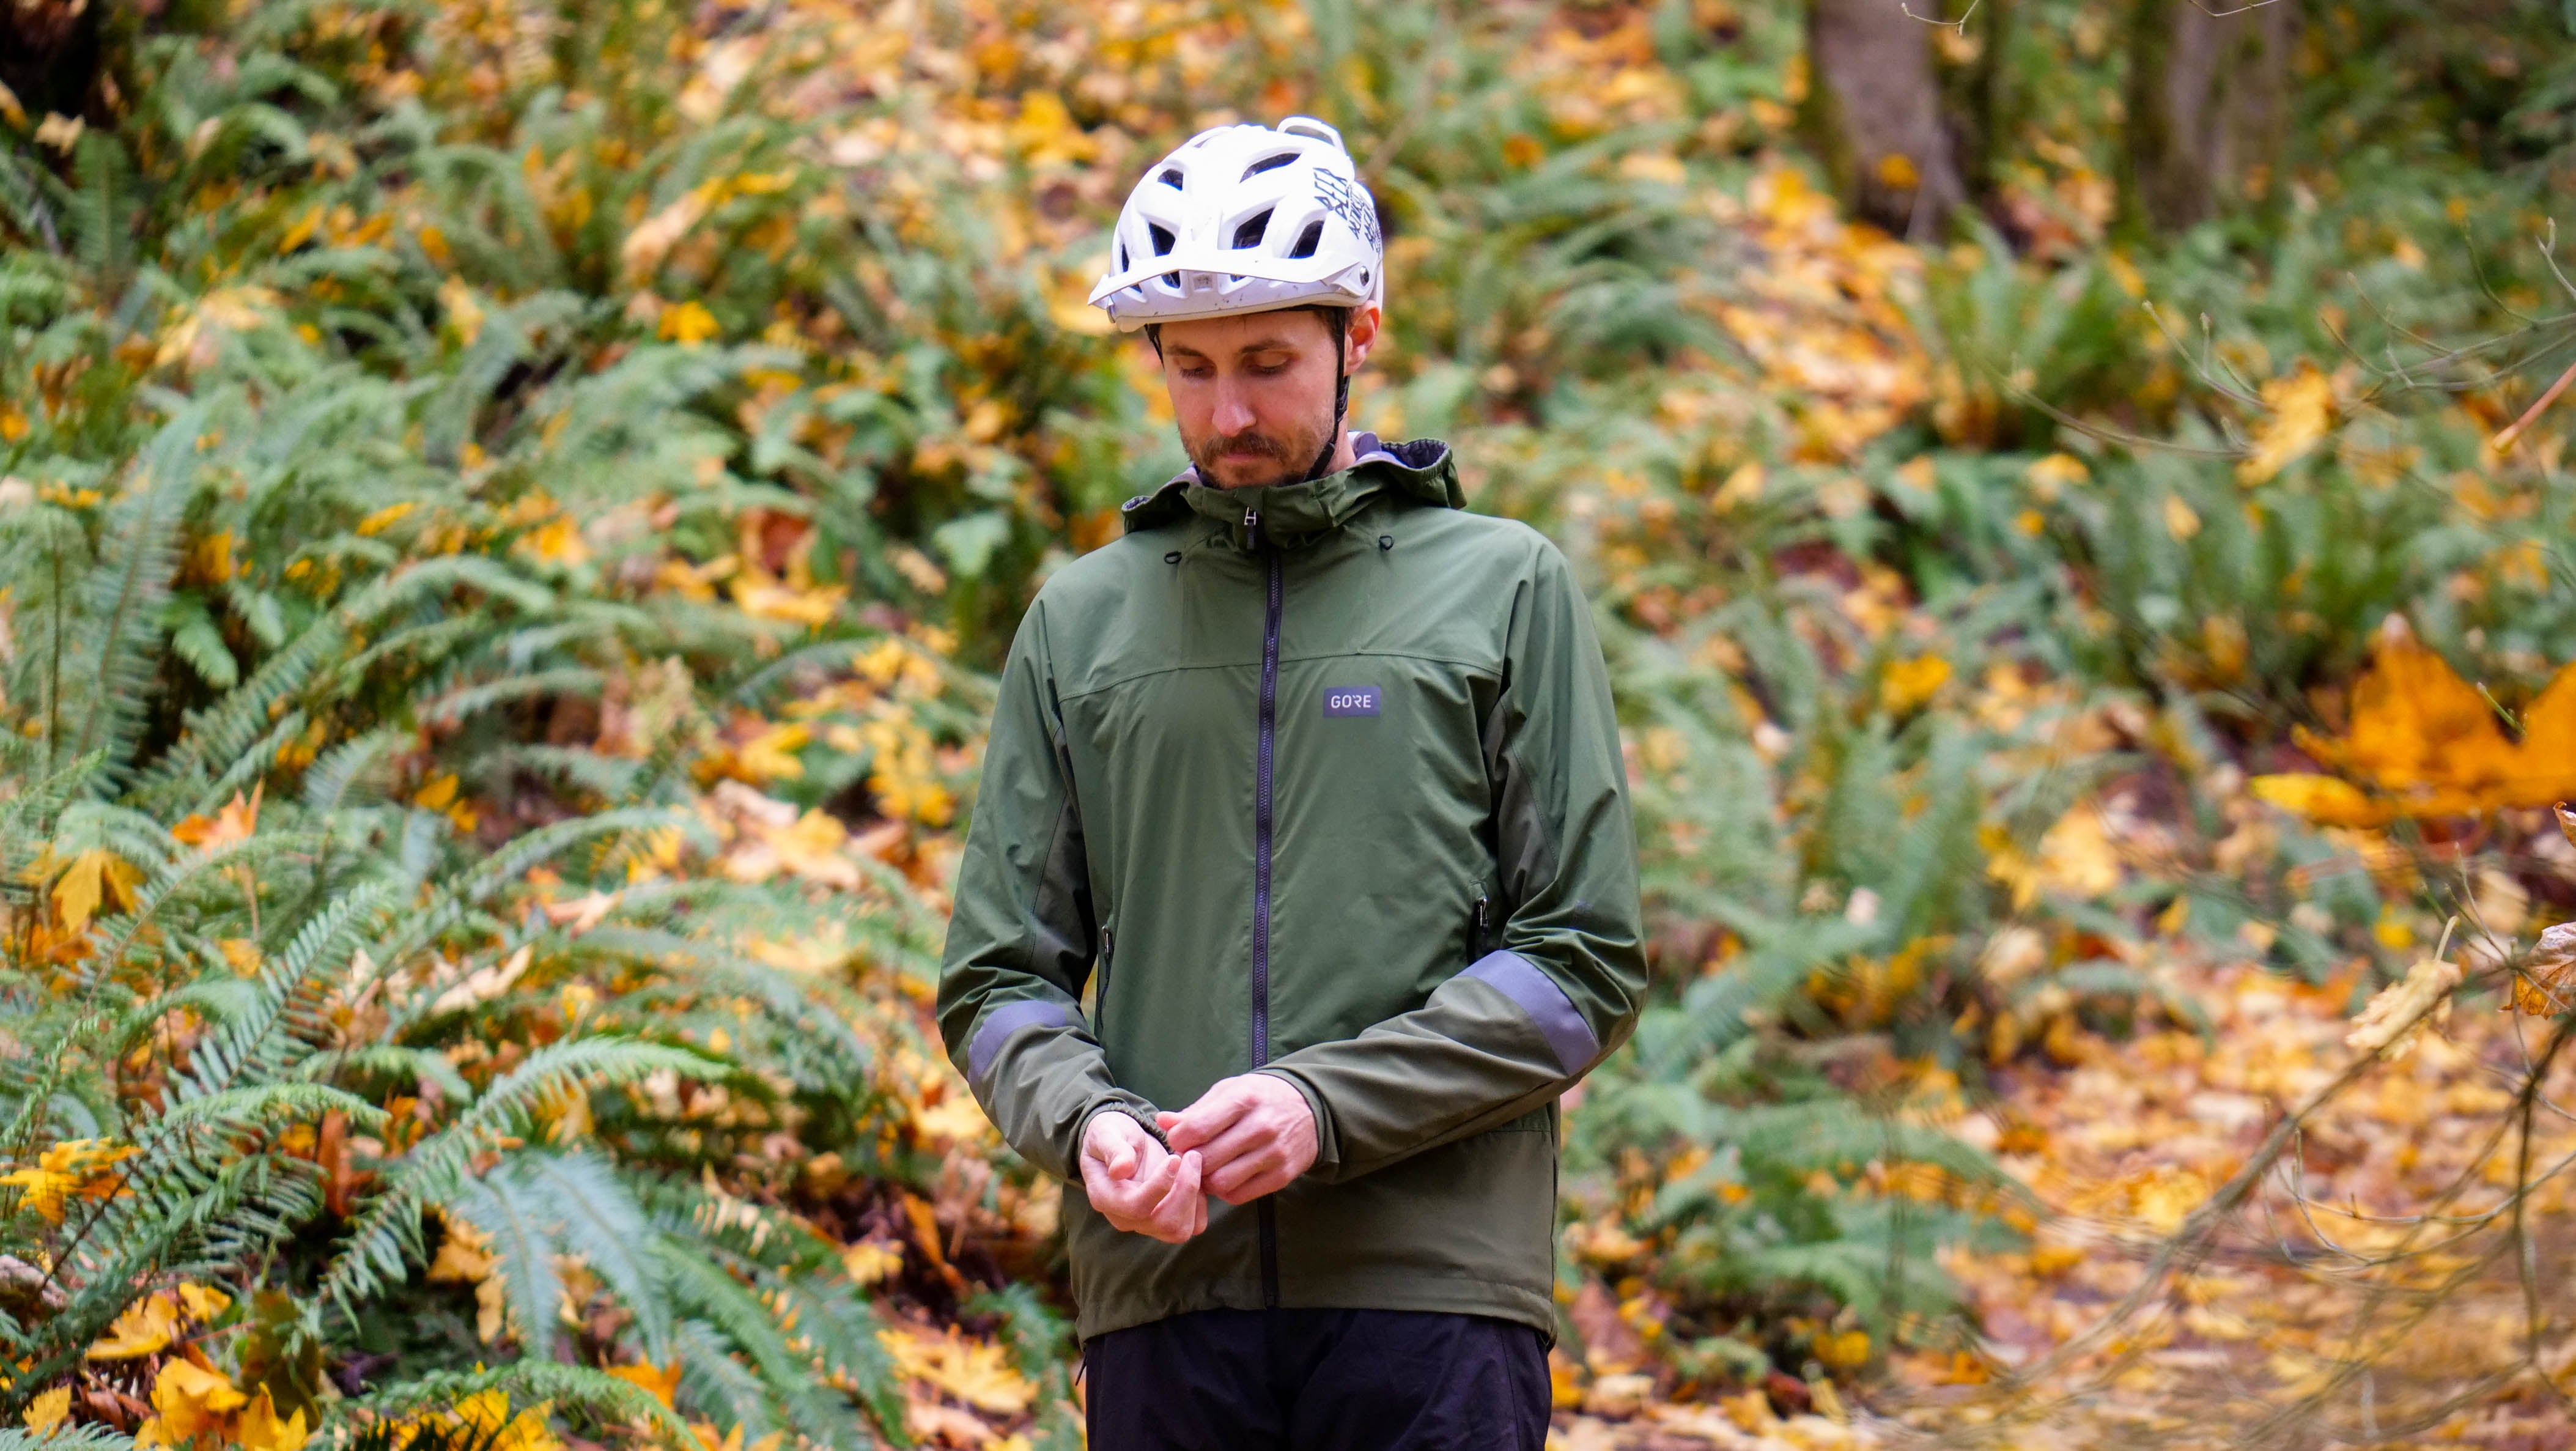 GOREWEAR MTB Rain jacket for biking